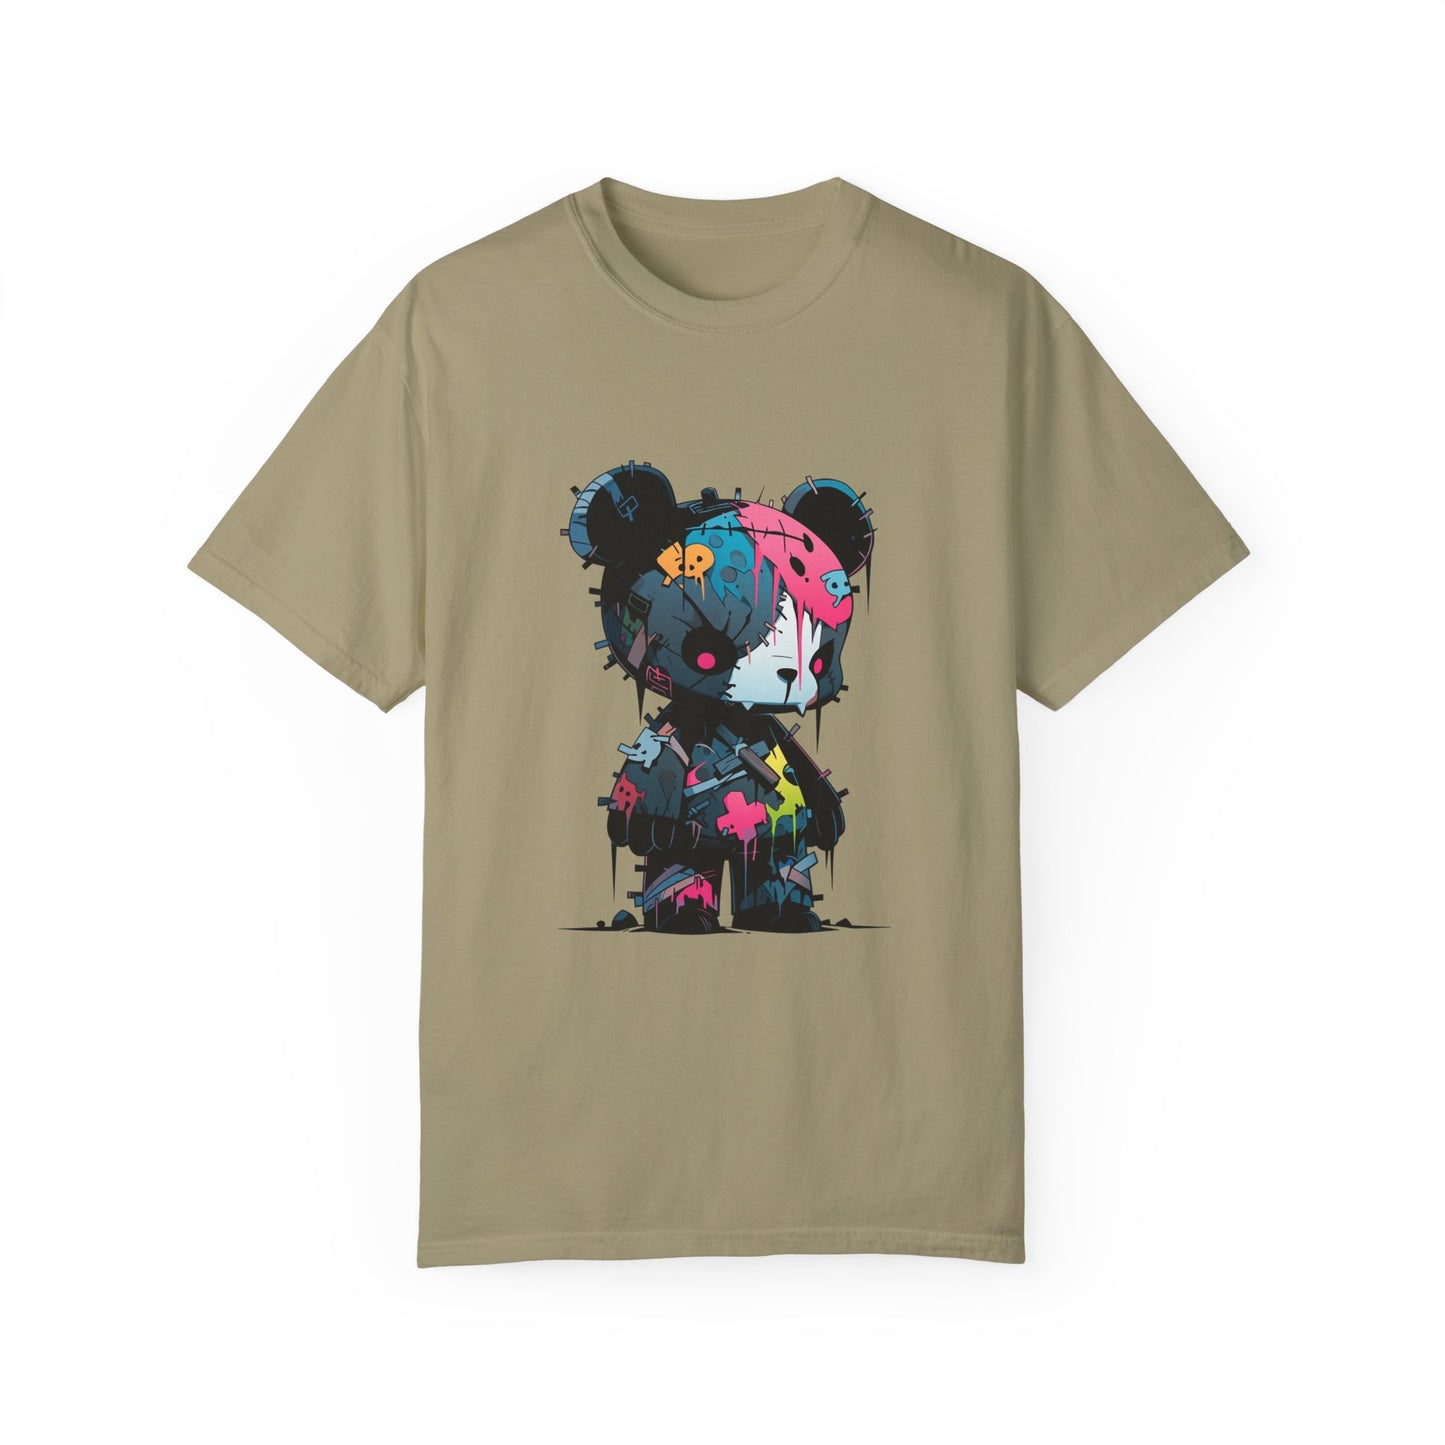 Hip Hop Teddy Bear Graphic Unisex Garment-dyed T-shirt Cotton Funny Humorous Graphic Soft Premium Unisex Men Women Khaki T-shirt Birthday Gift-11